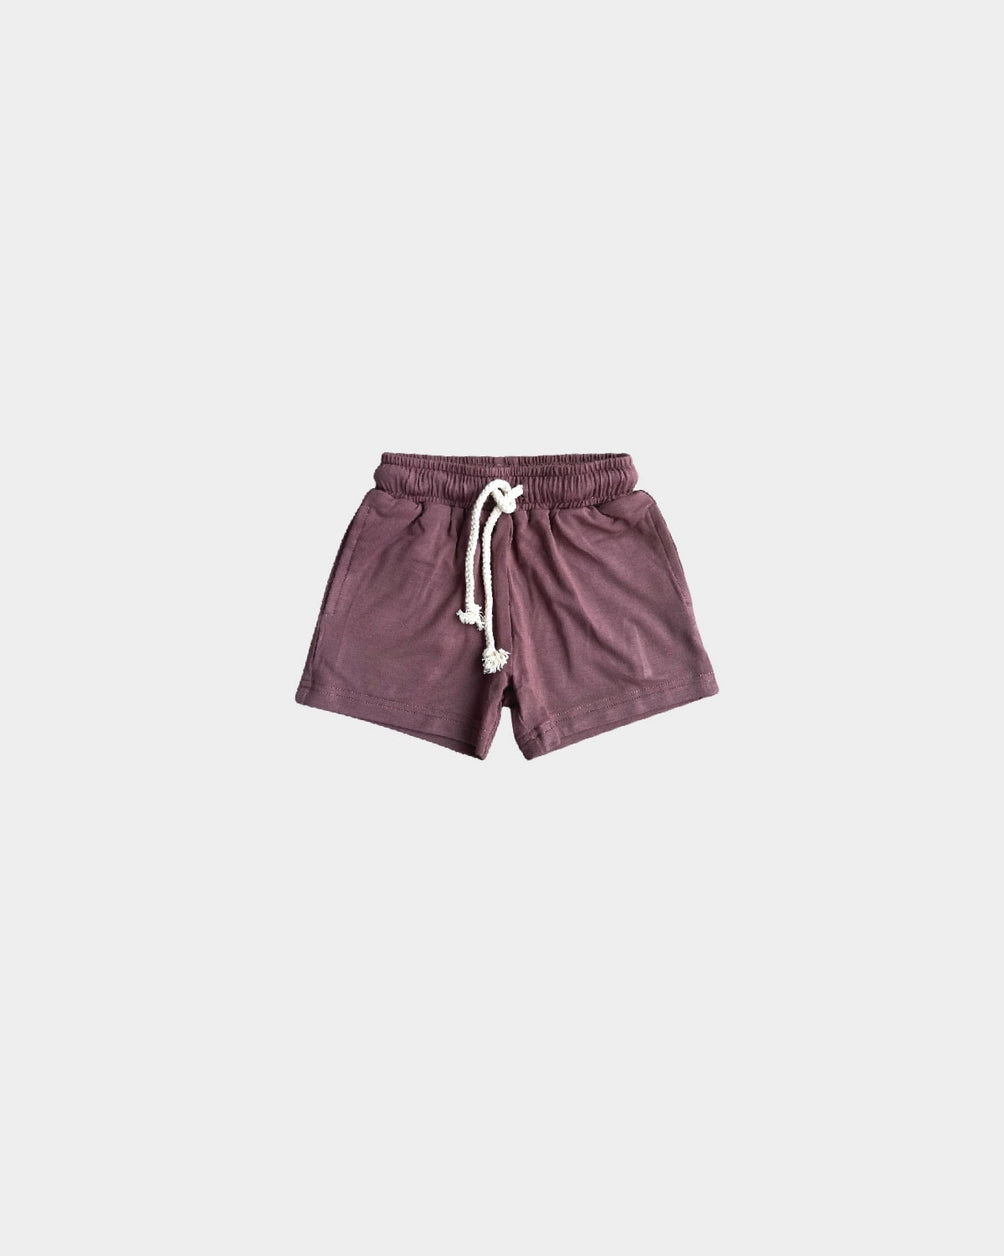 Burgundy Shorts